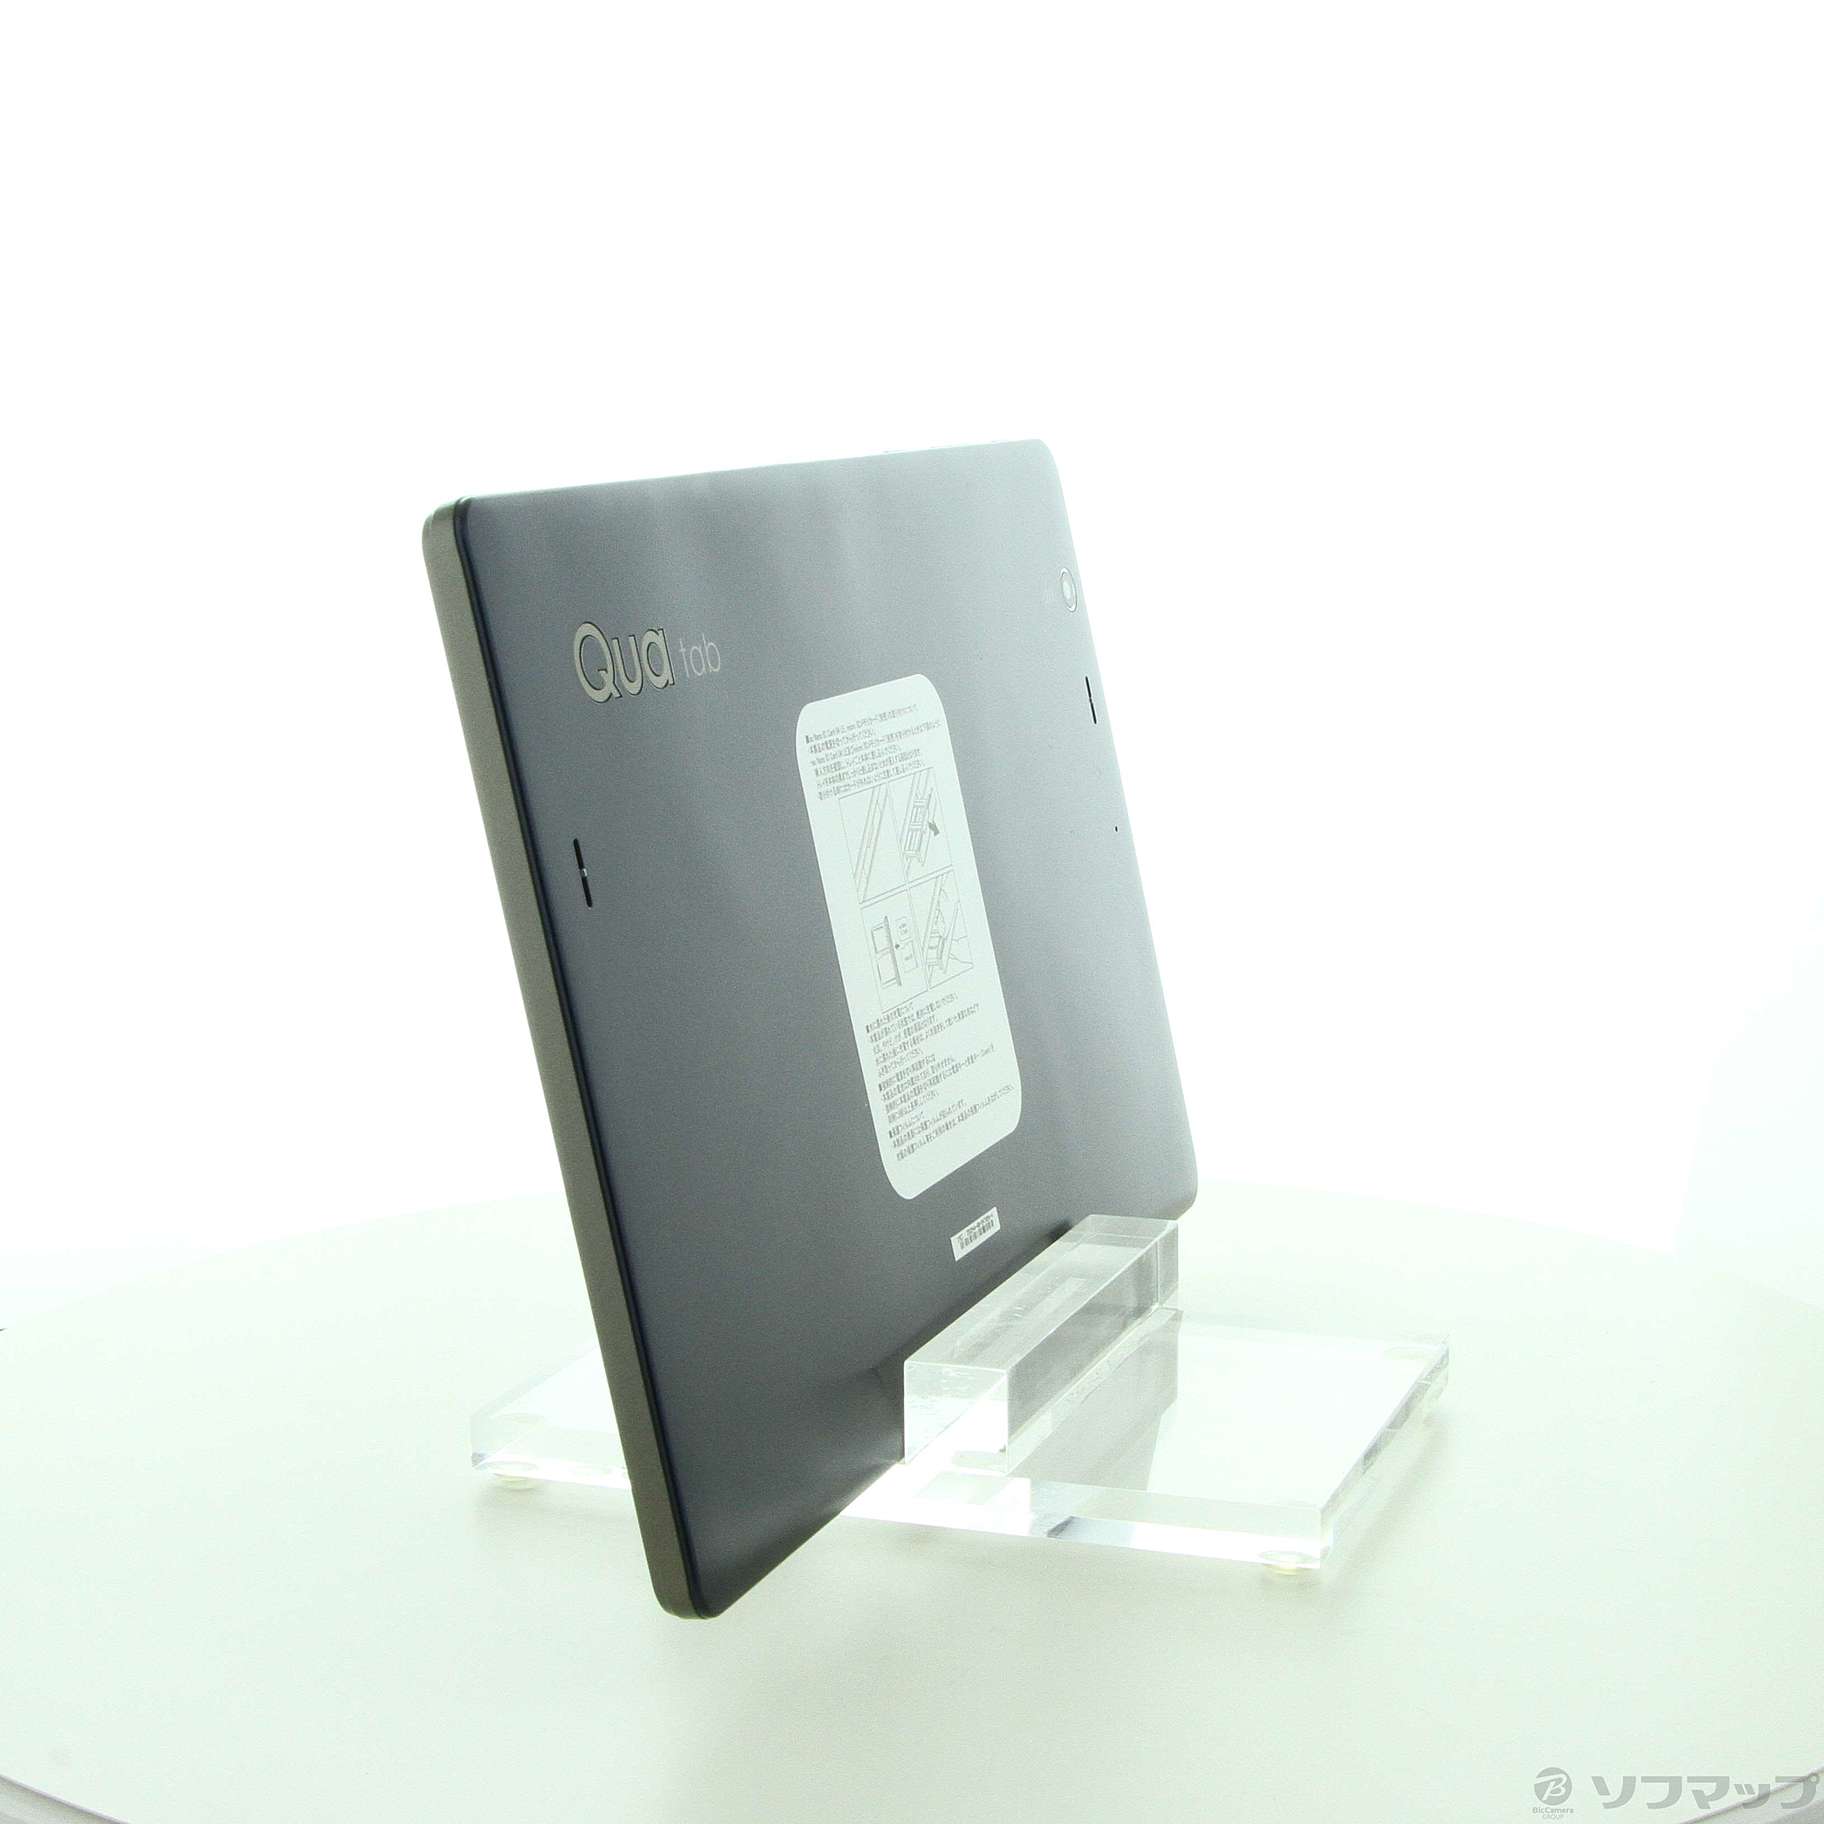 Qua tab PZ 16GB ネイビー LGT32 au